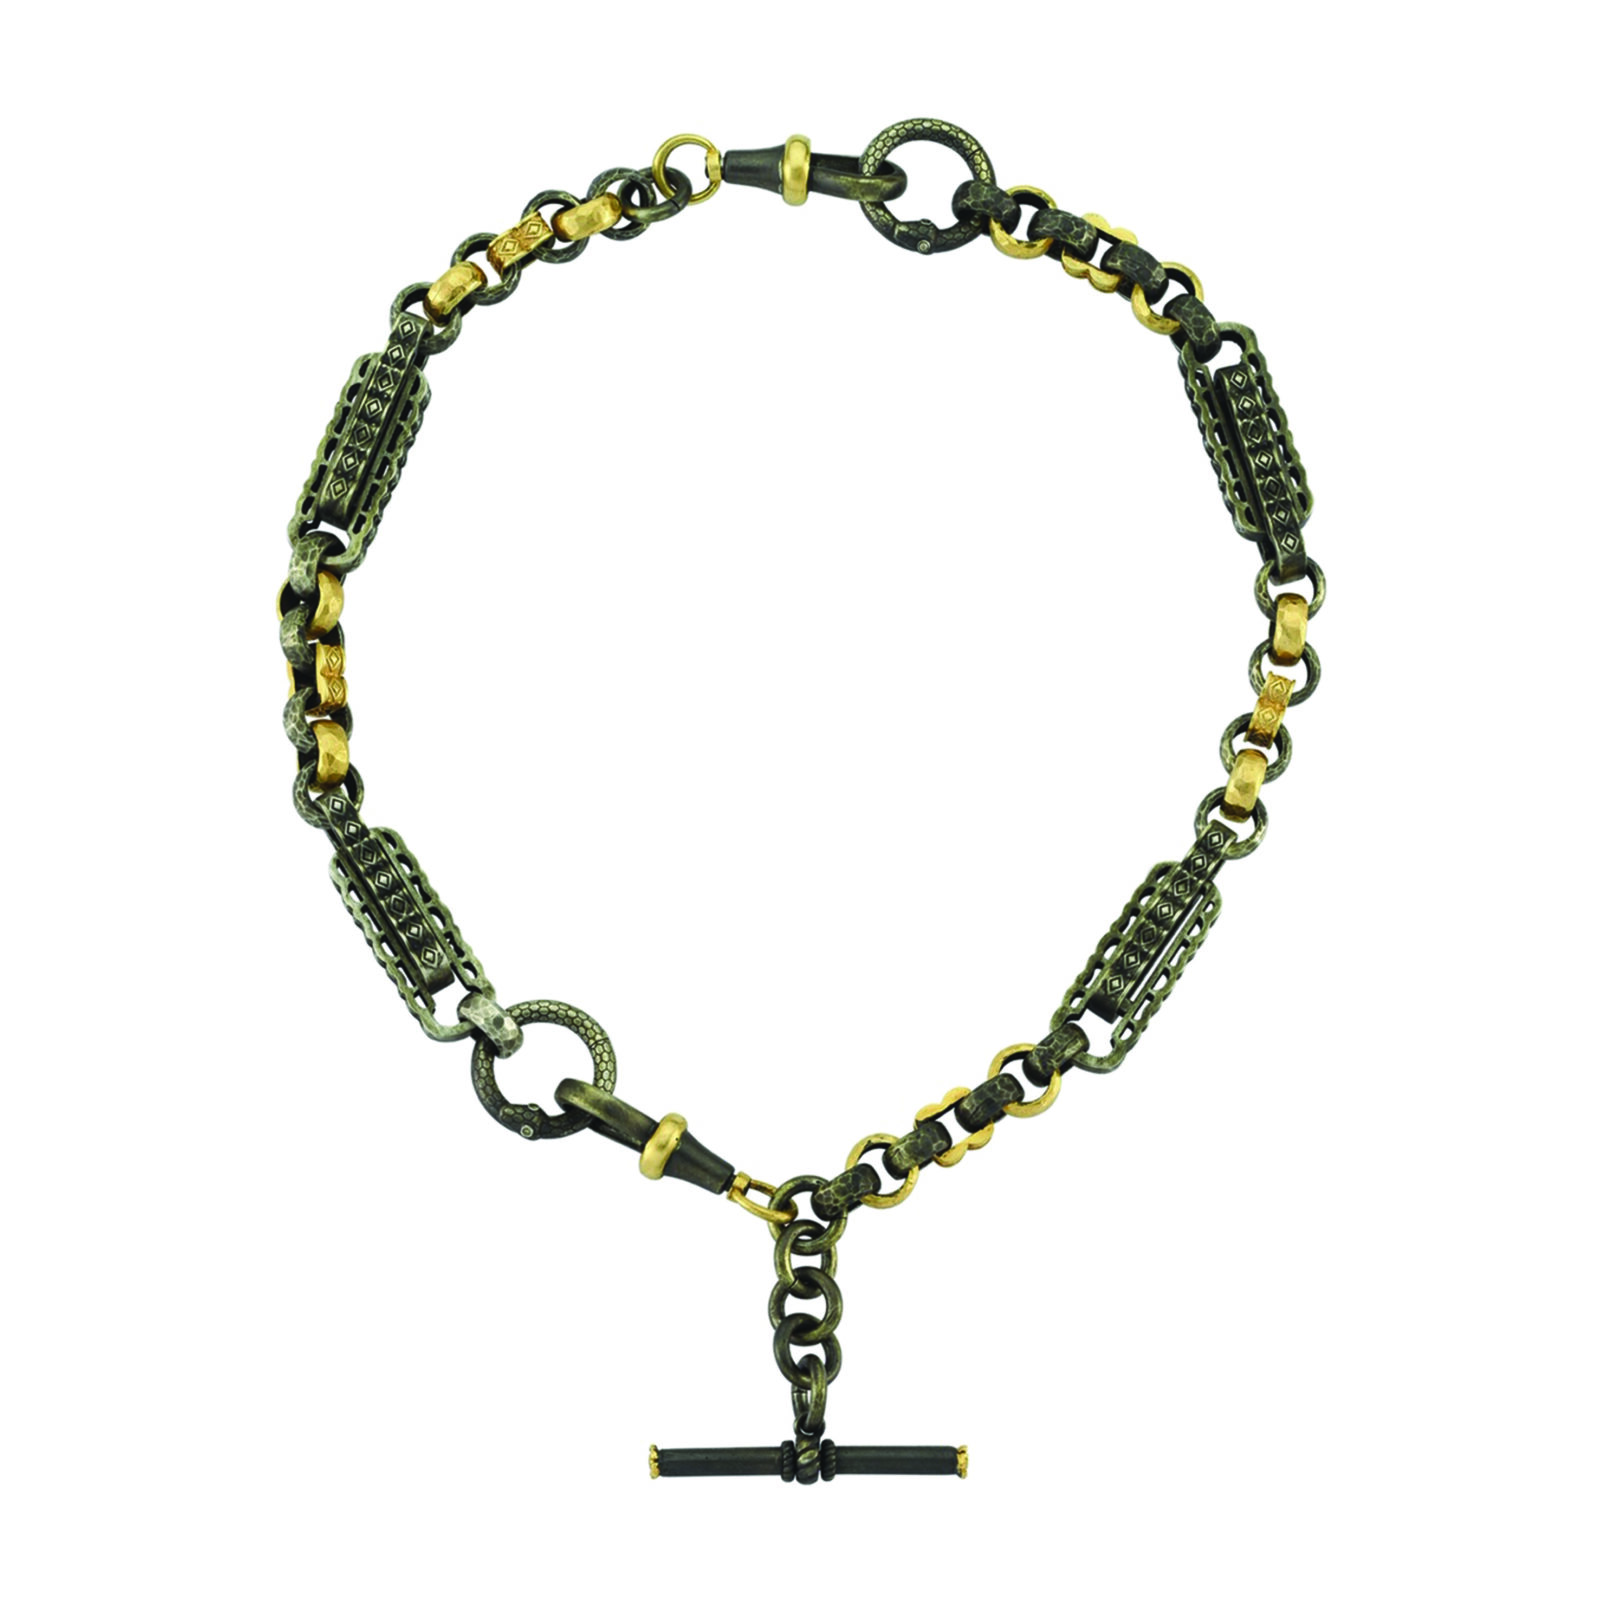 Luxury 18K Rose Gold GF Stars and Bars T-Bar Bracelet and Chain Set | eBay